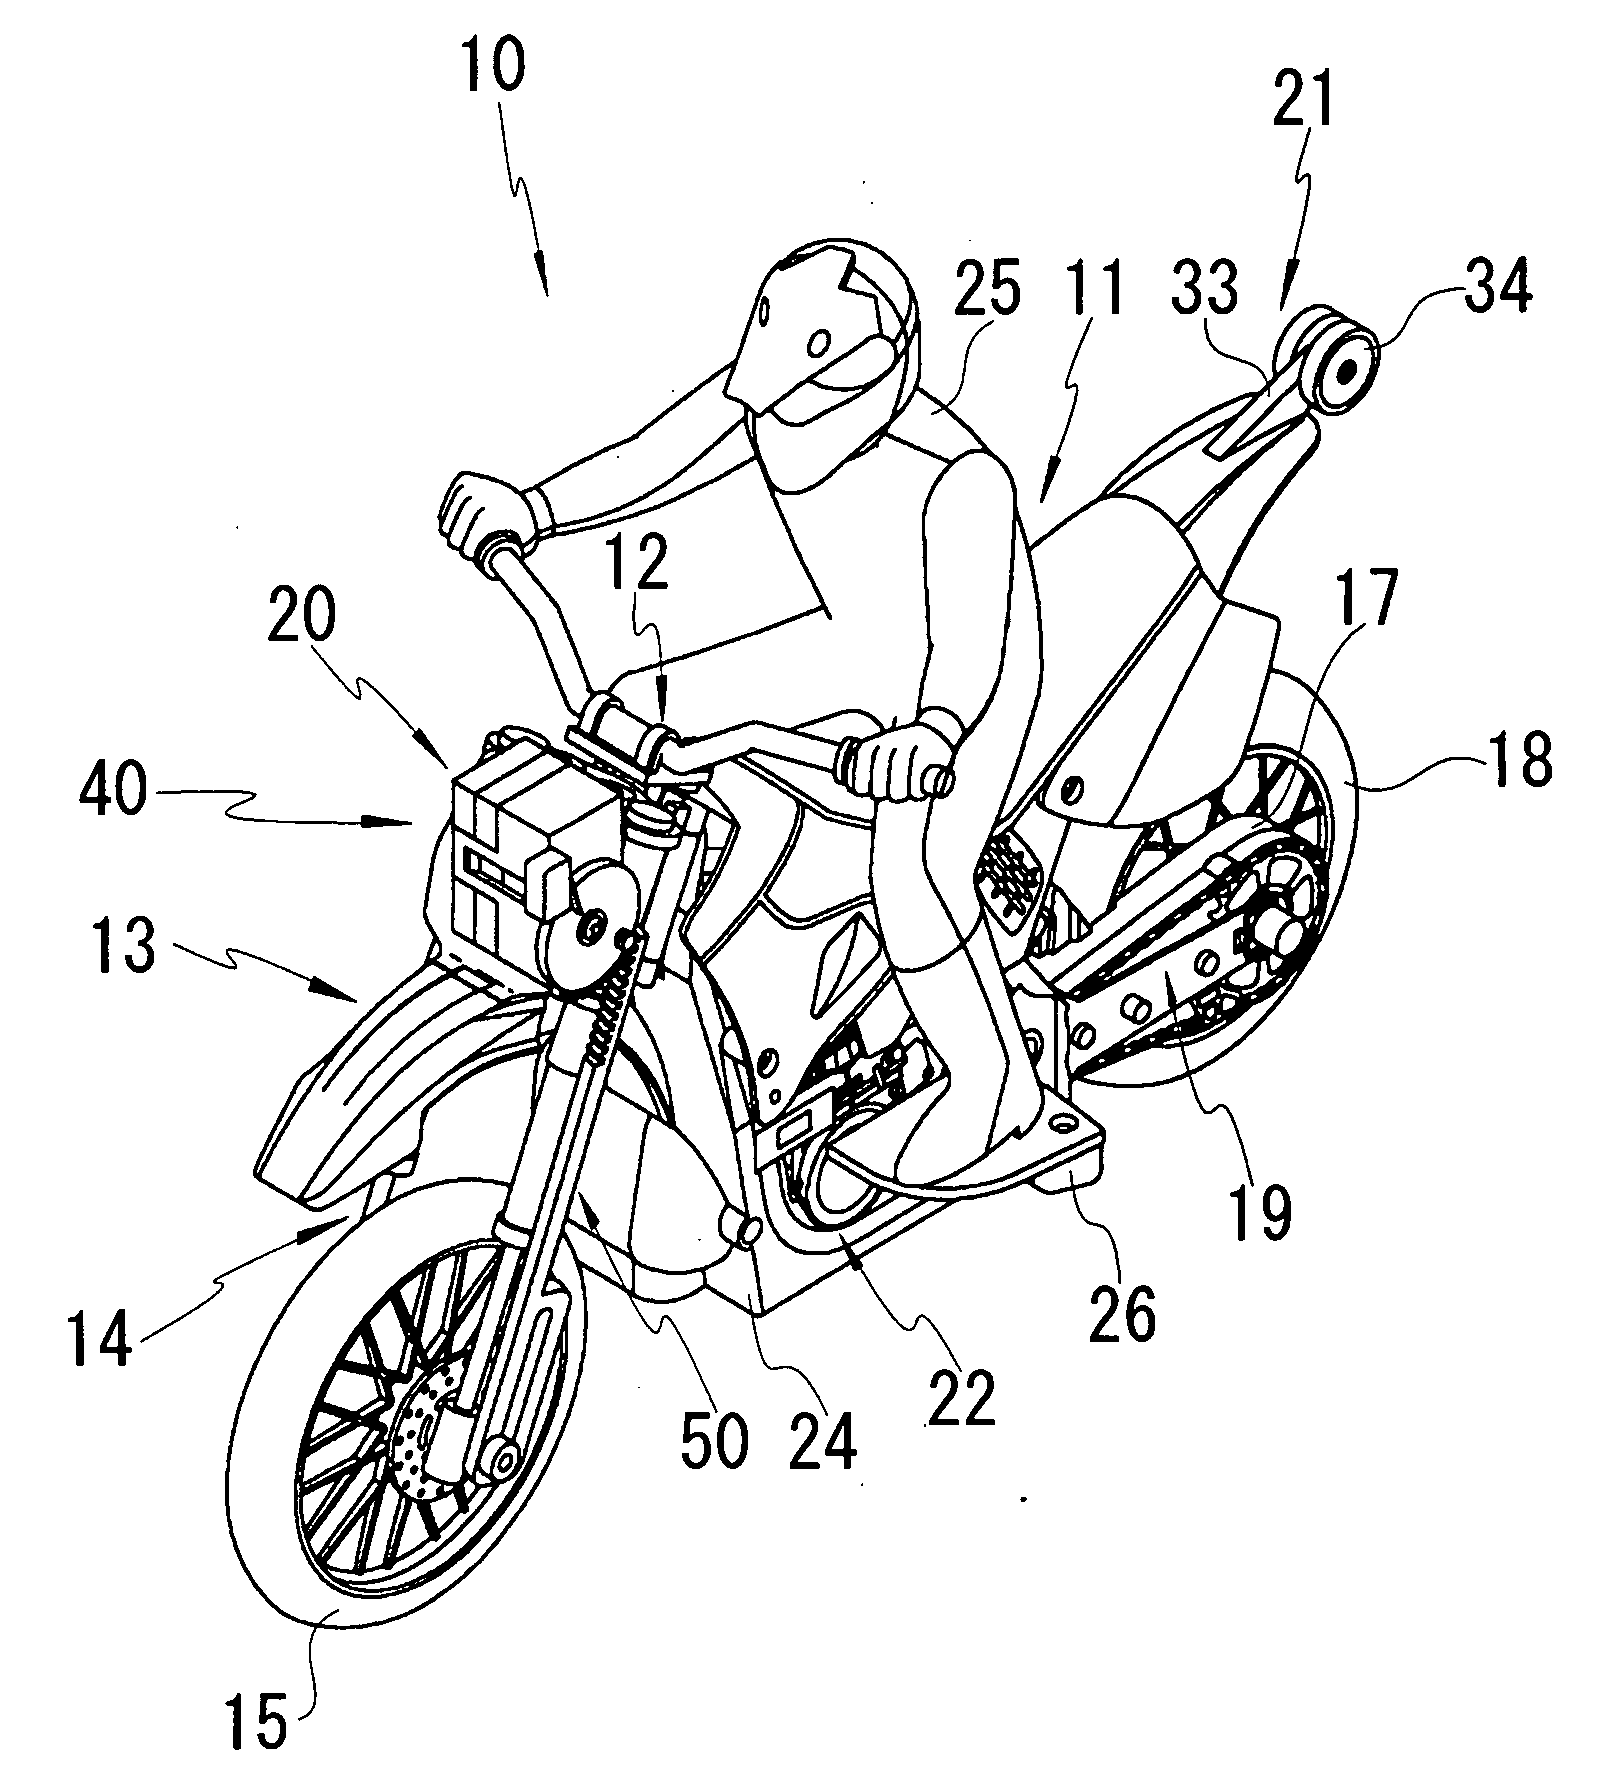 Radio control two-wheel vehicle toy